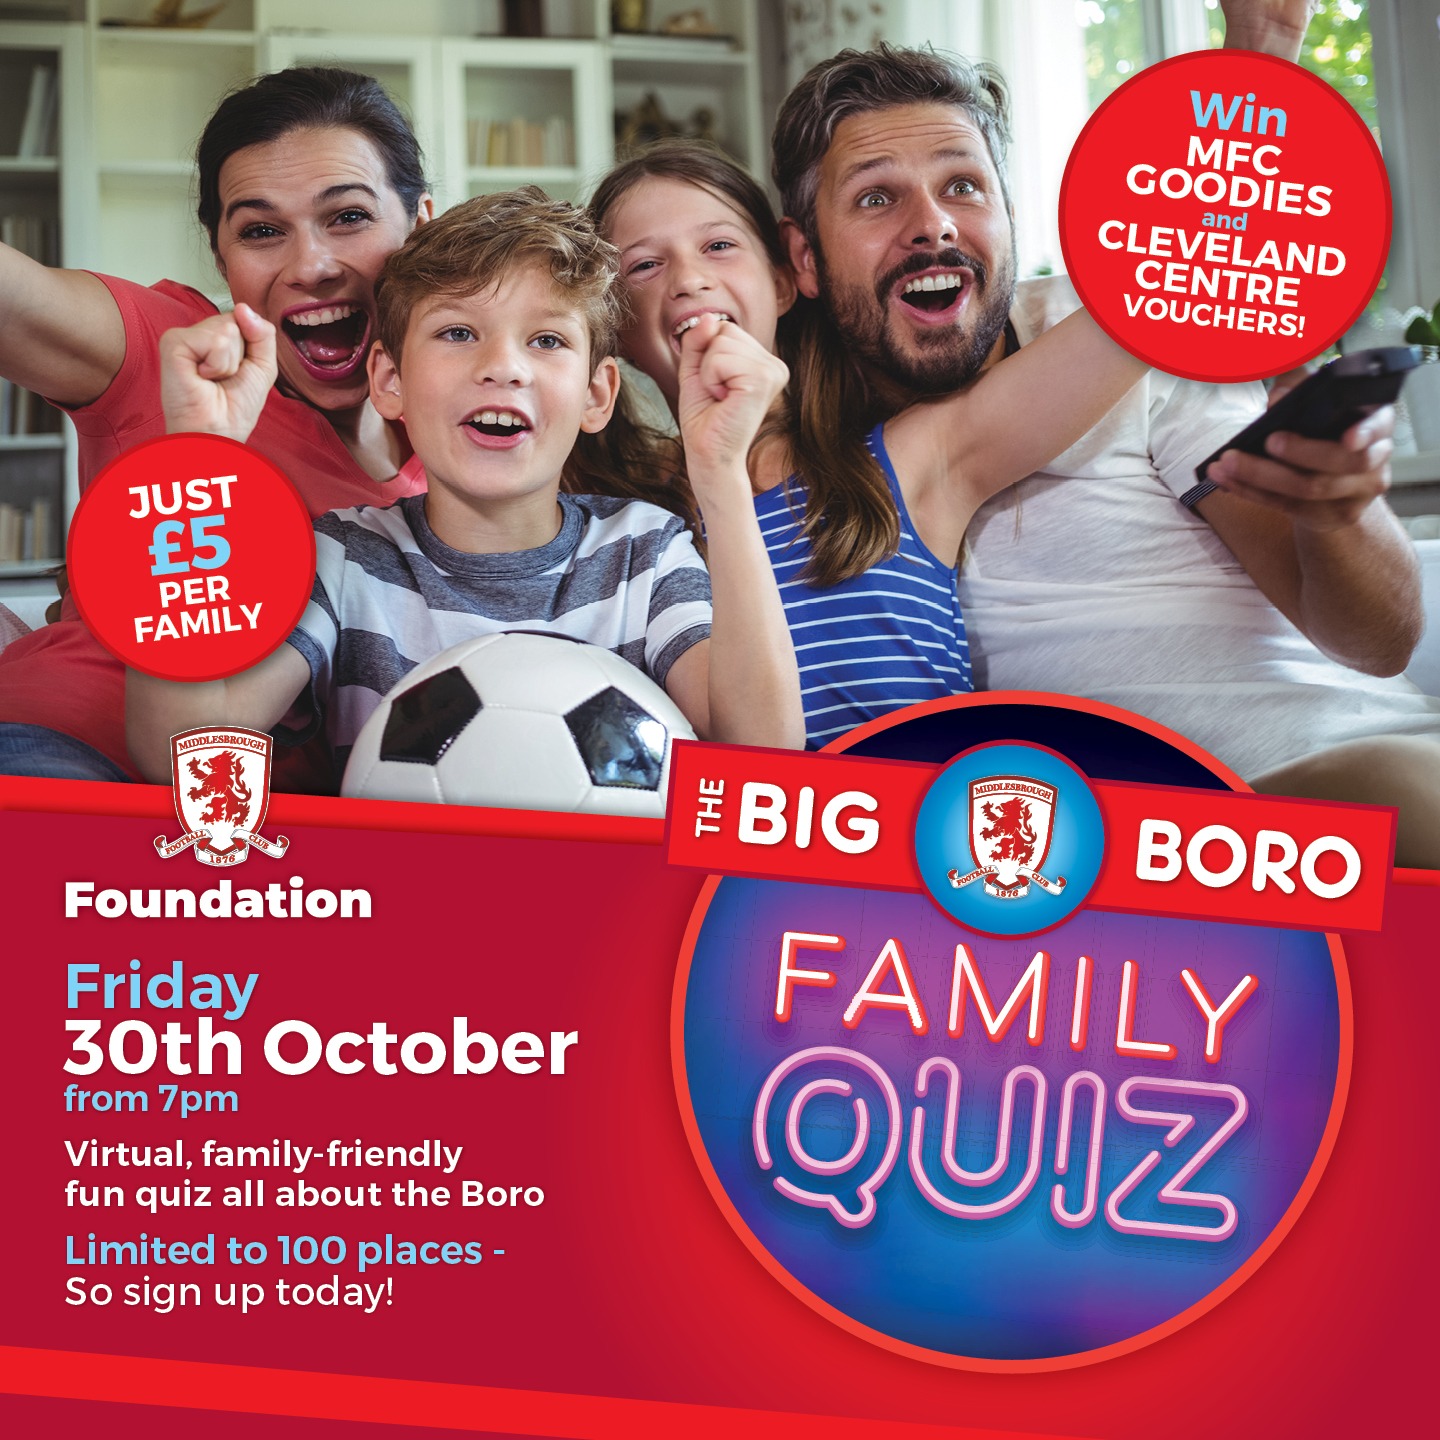 The Big Boro Family Quiz